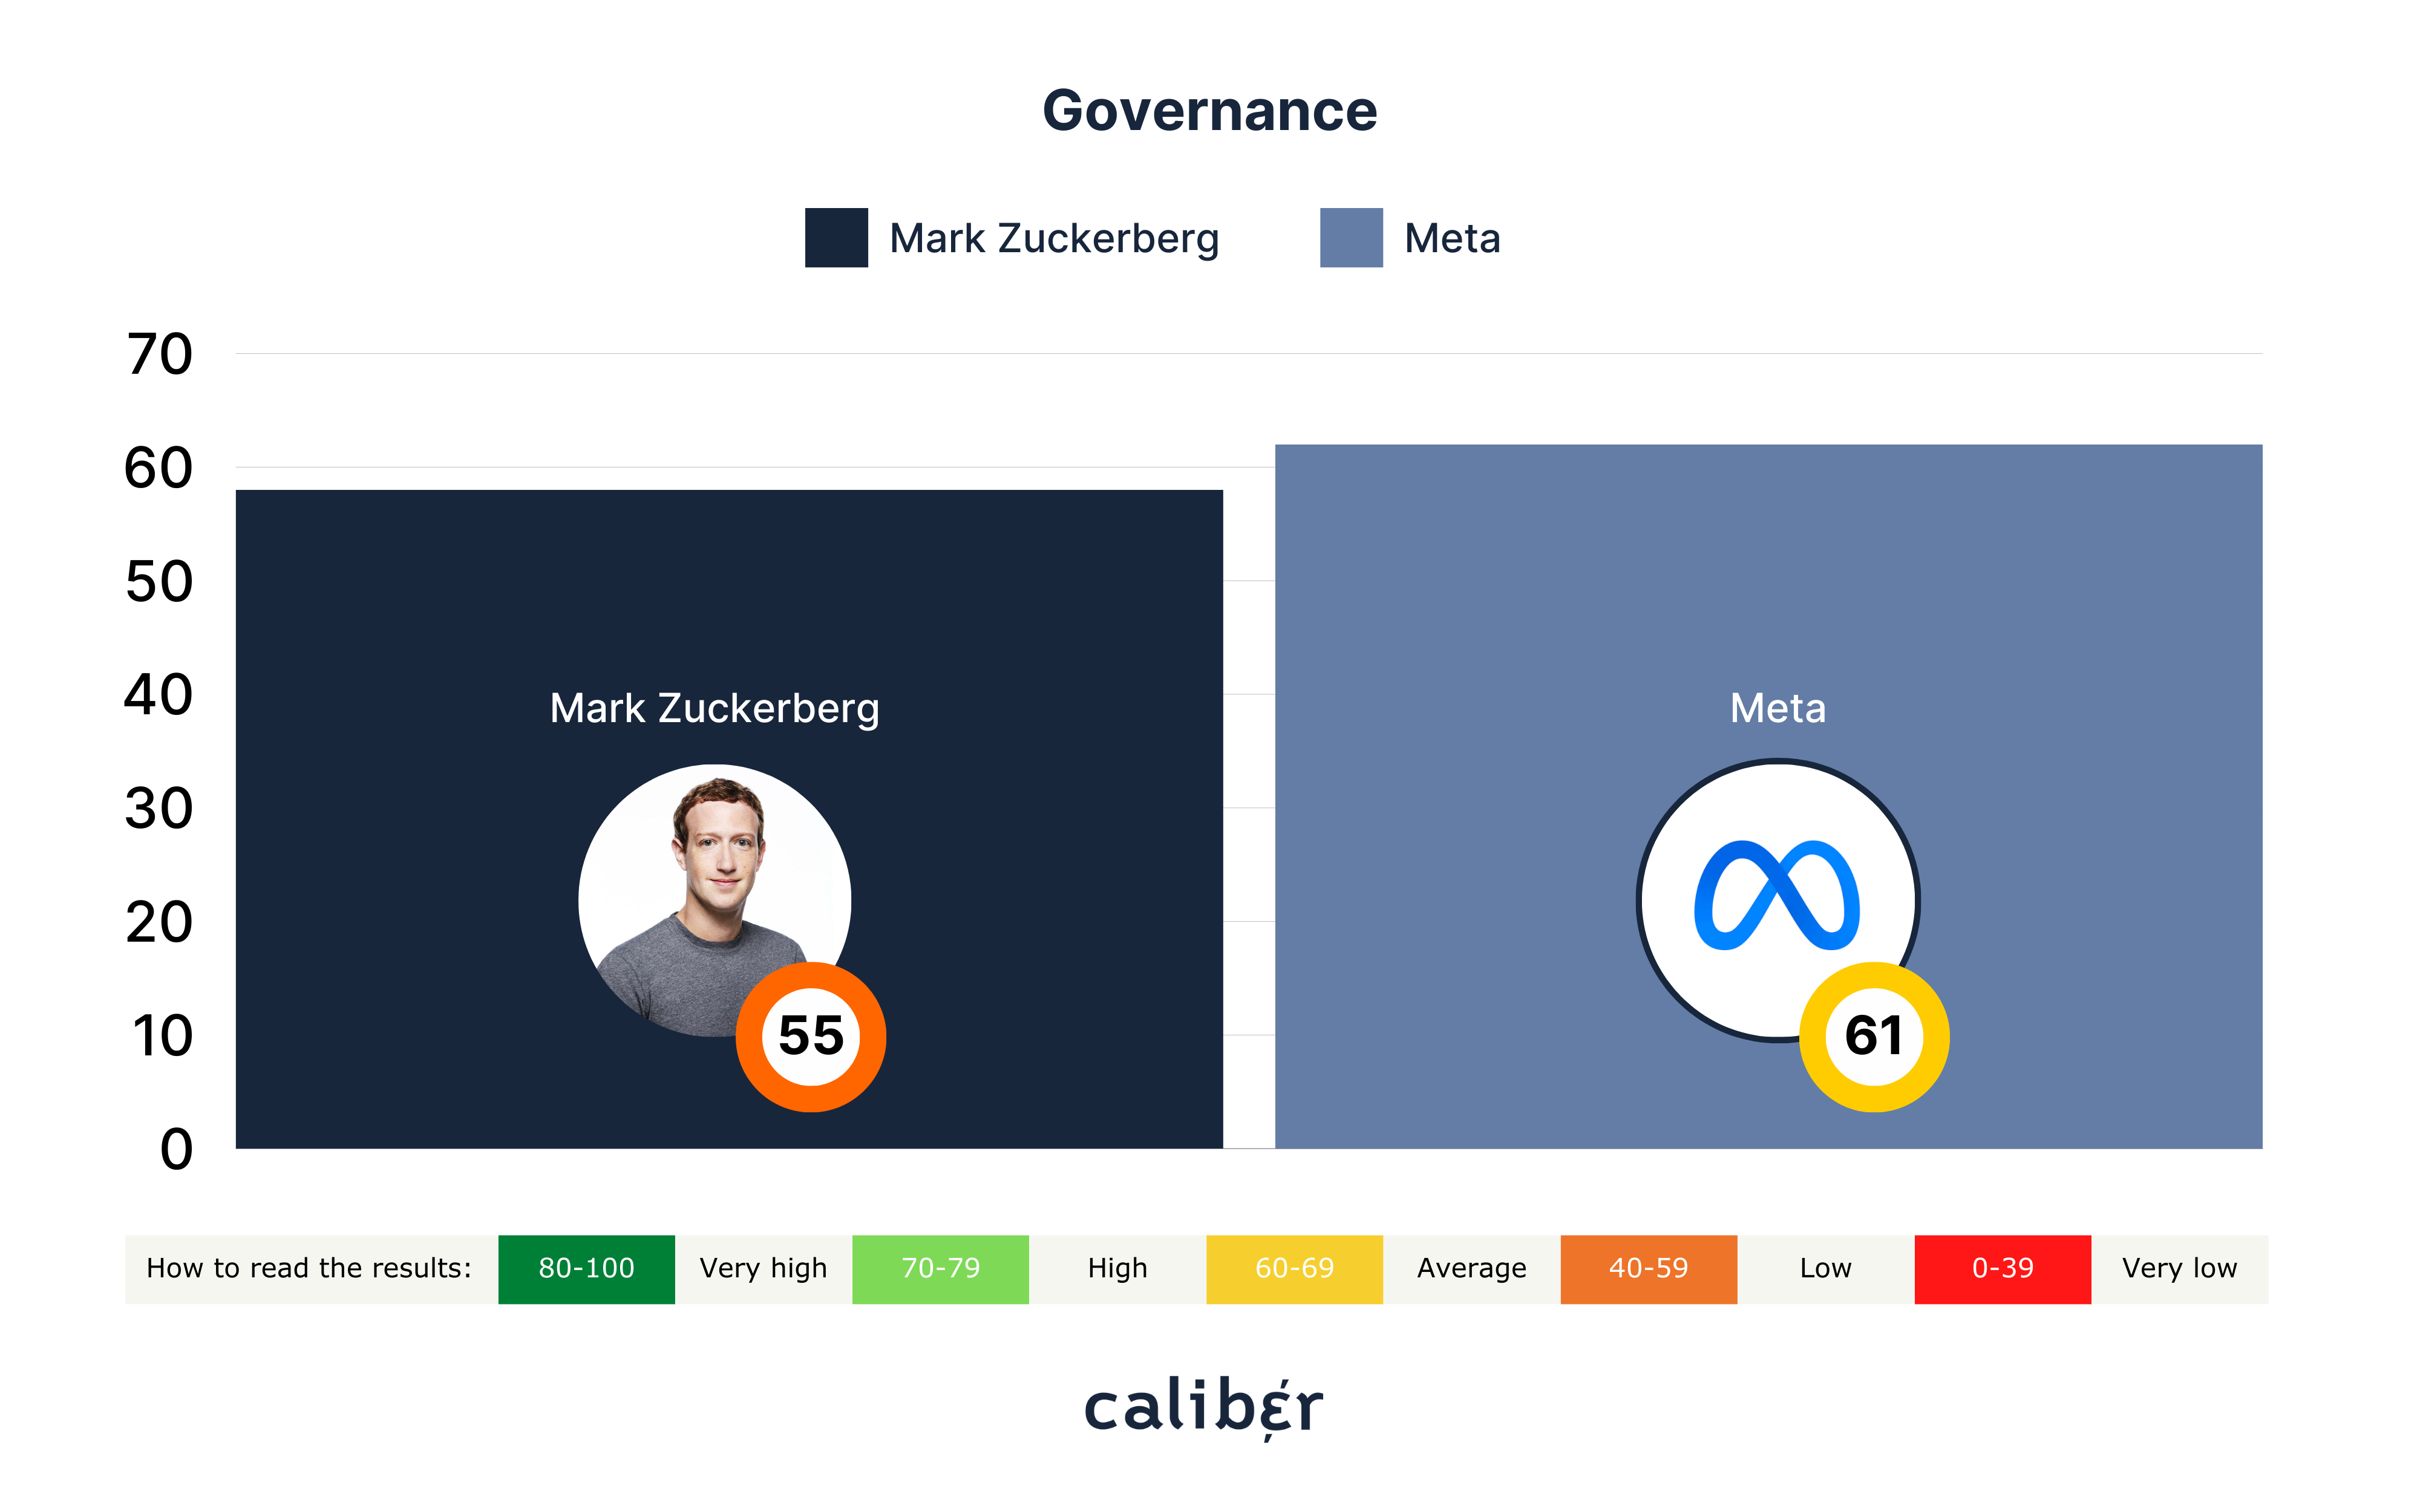 Mark Zuckerberg Governance Score